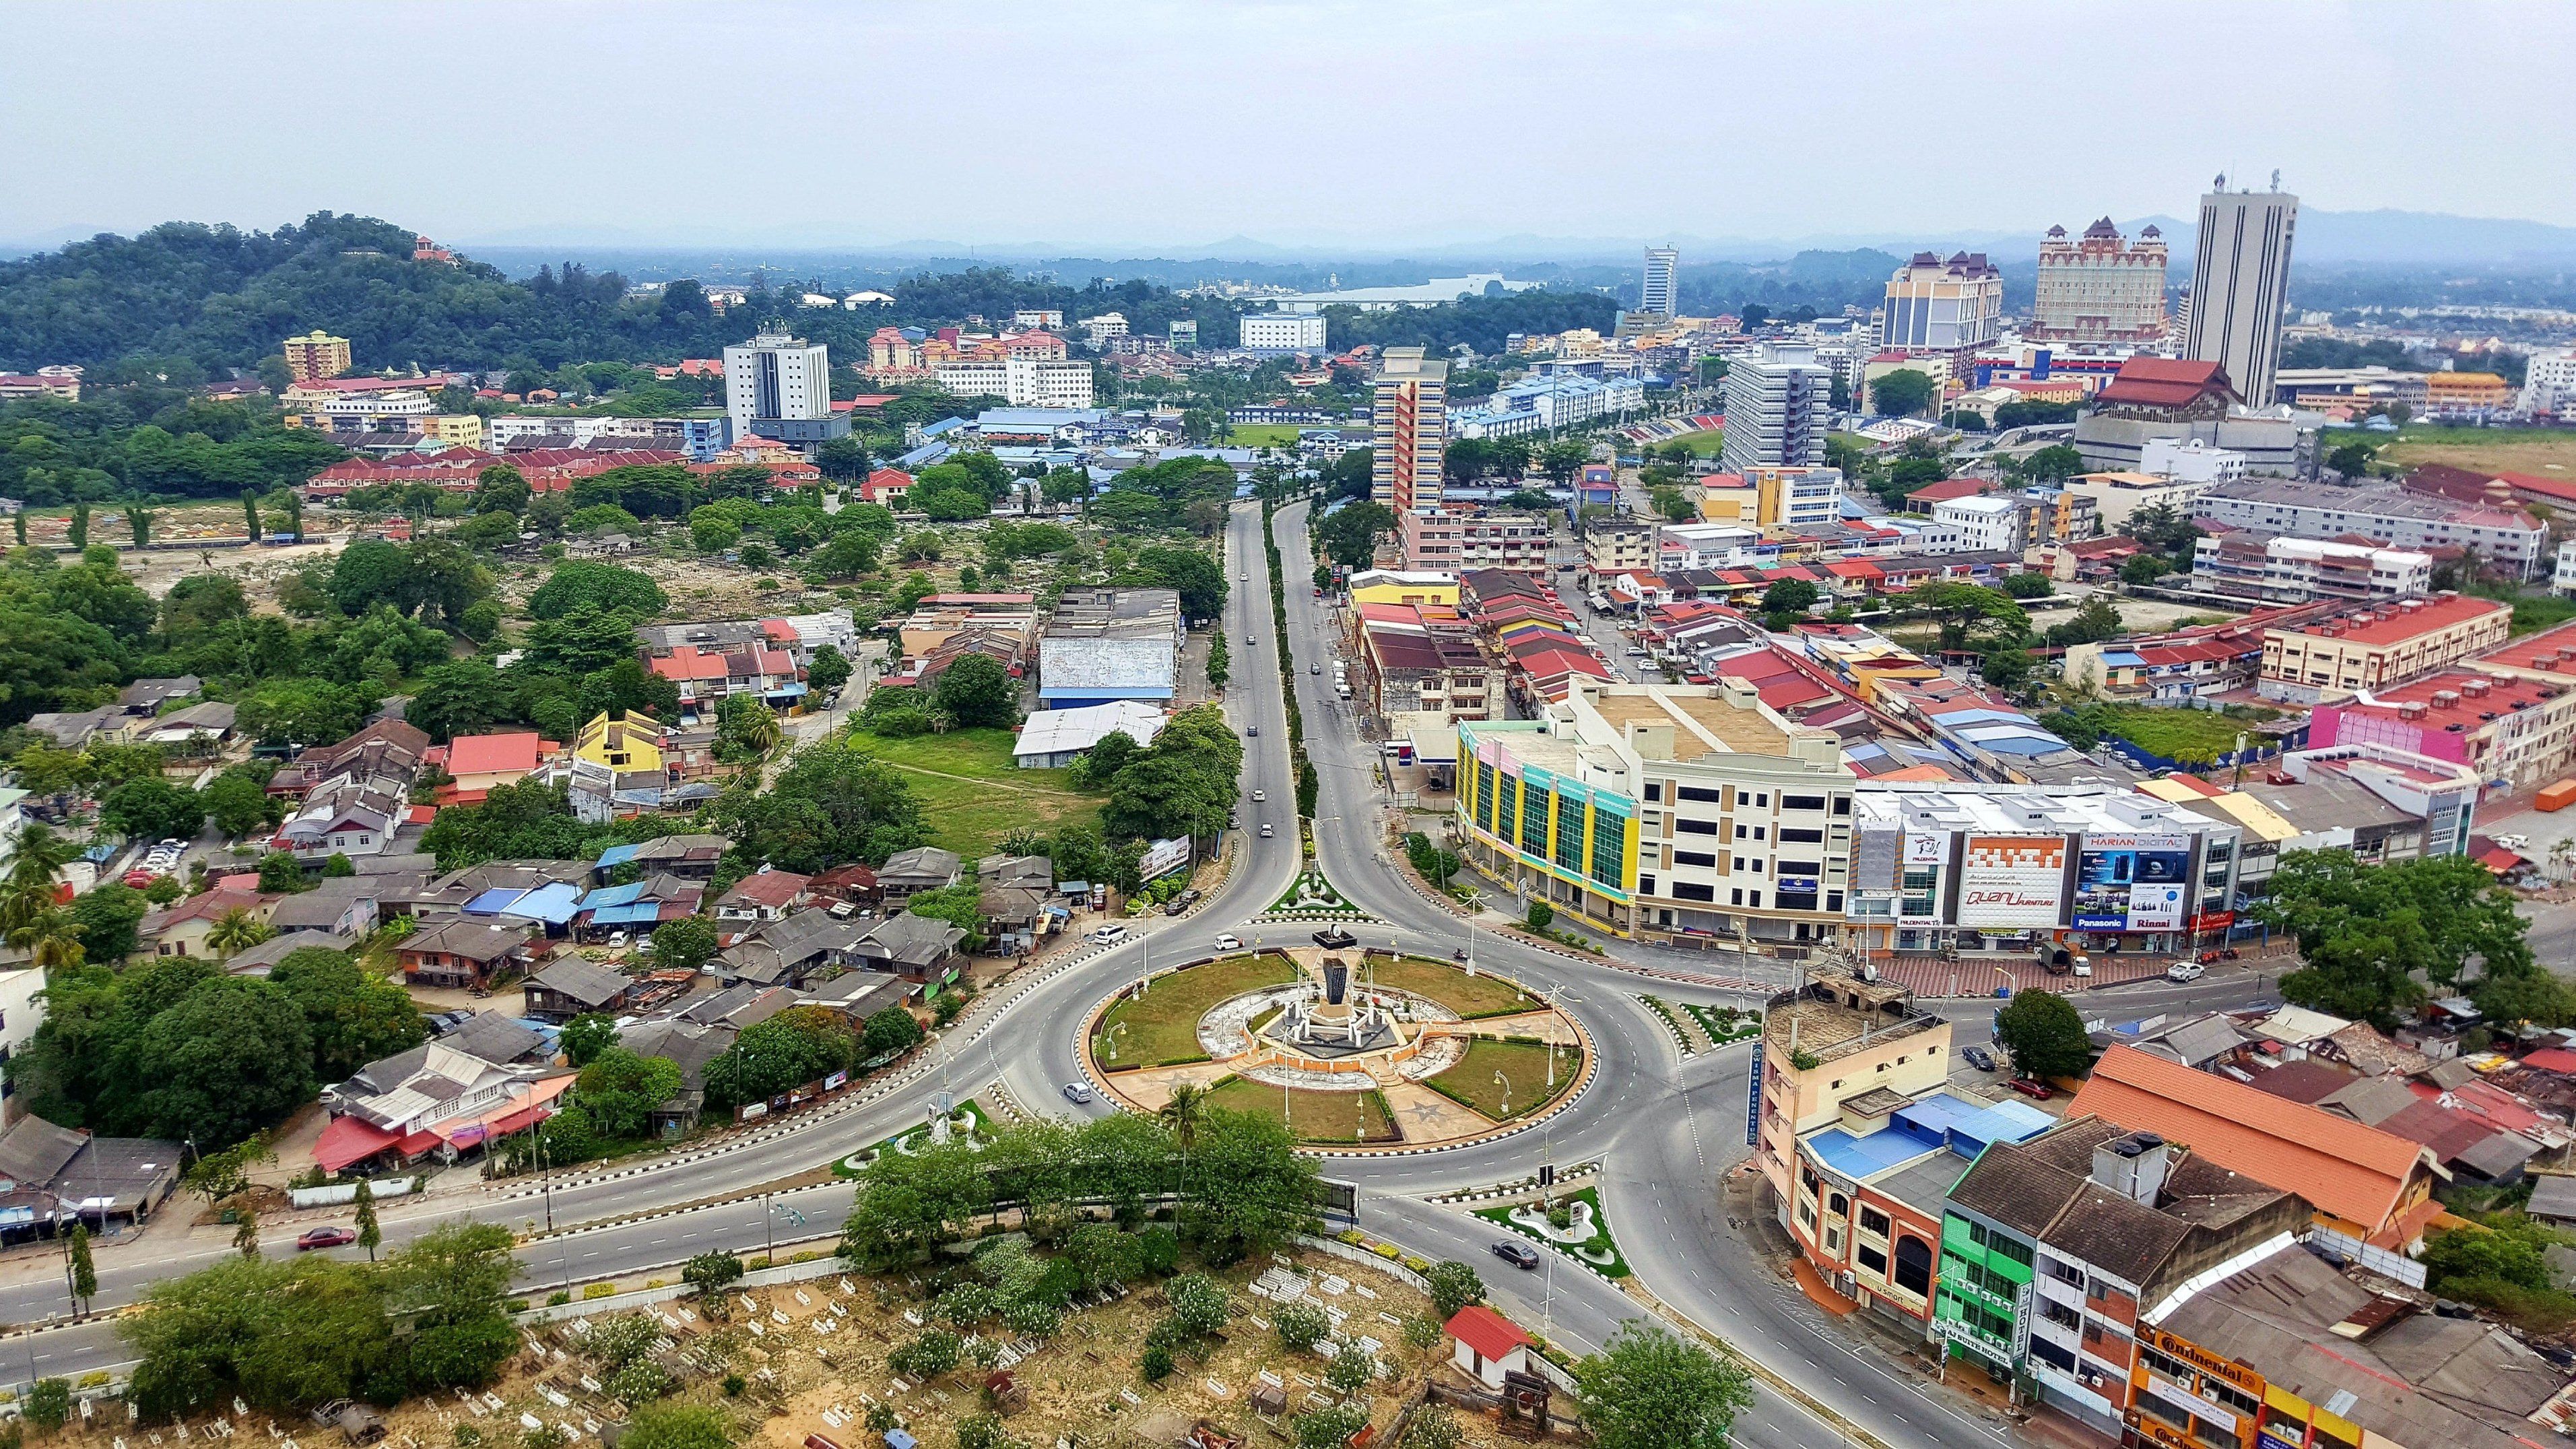 Batu bersurat roundabout, Kuala Terengganu, Malaysia